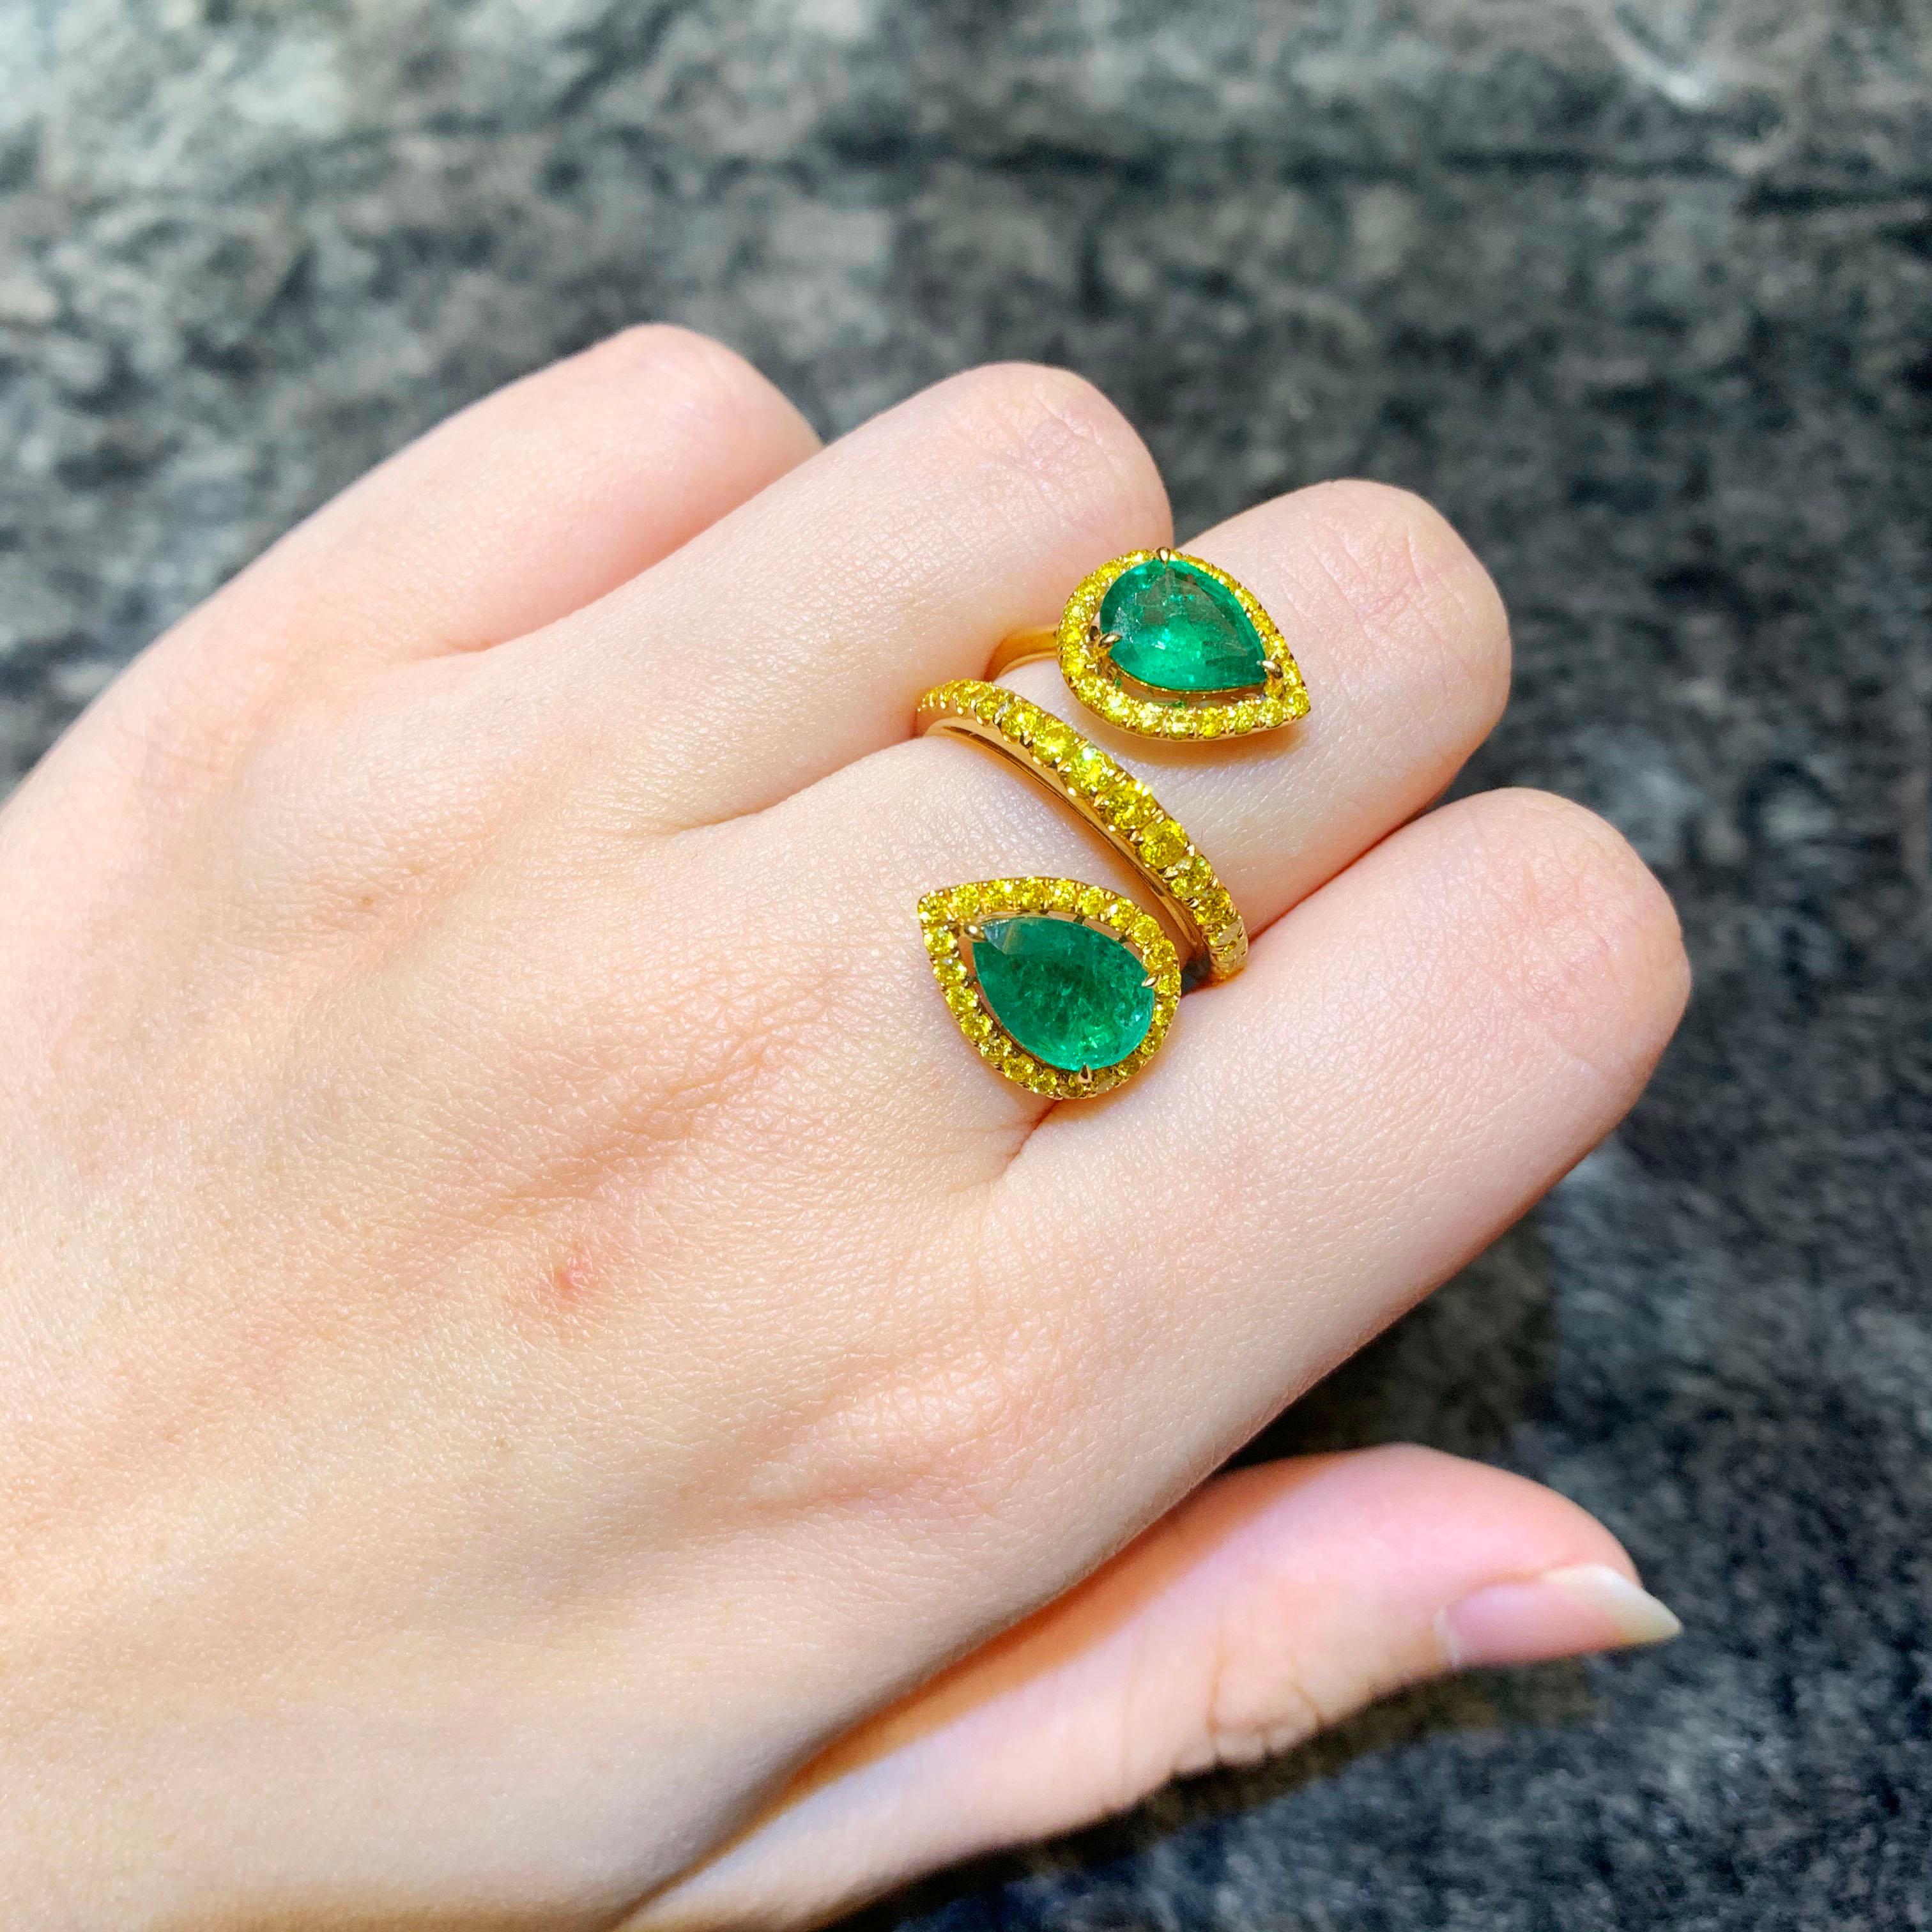 Serpenti designer ring with 2.78 carat of Zambian Vivid Green Emerald and 1.11 carat of Mbuji Mine Vivid Yellow Diamond. 